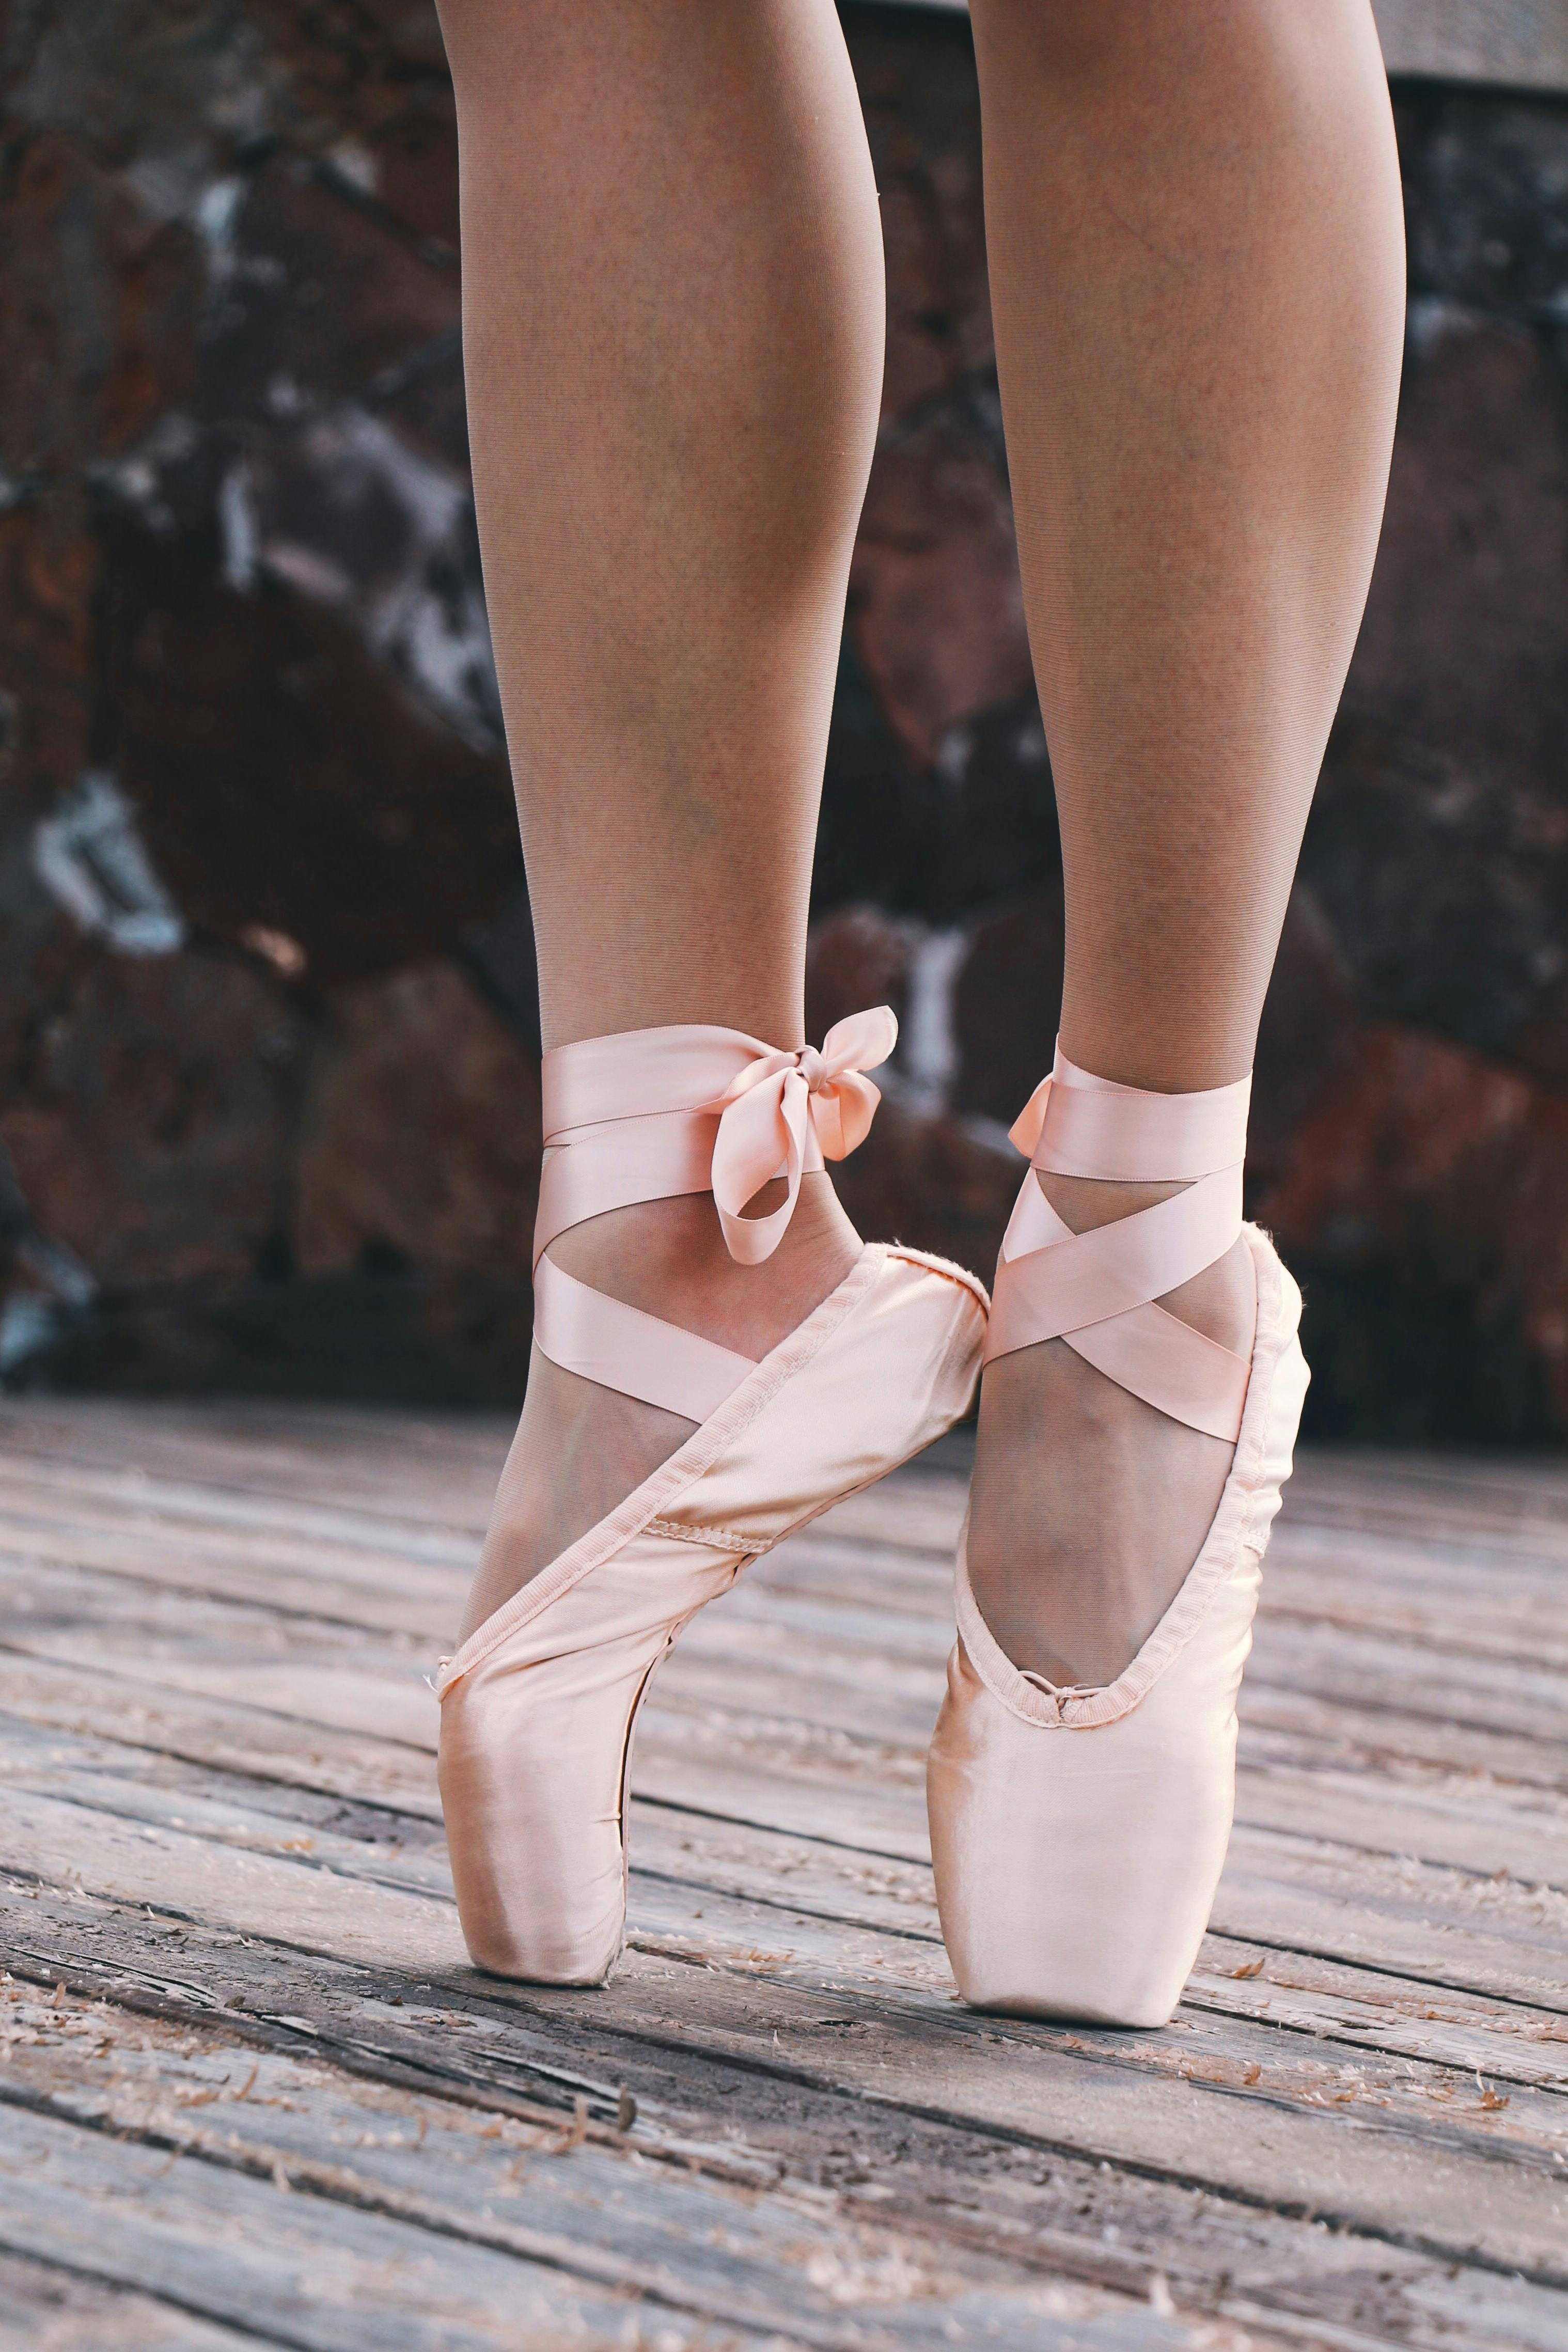 Ballet Flats Download The BEST Ballet Stock Photos & Images